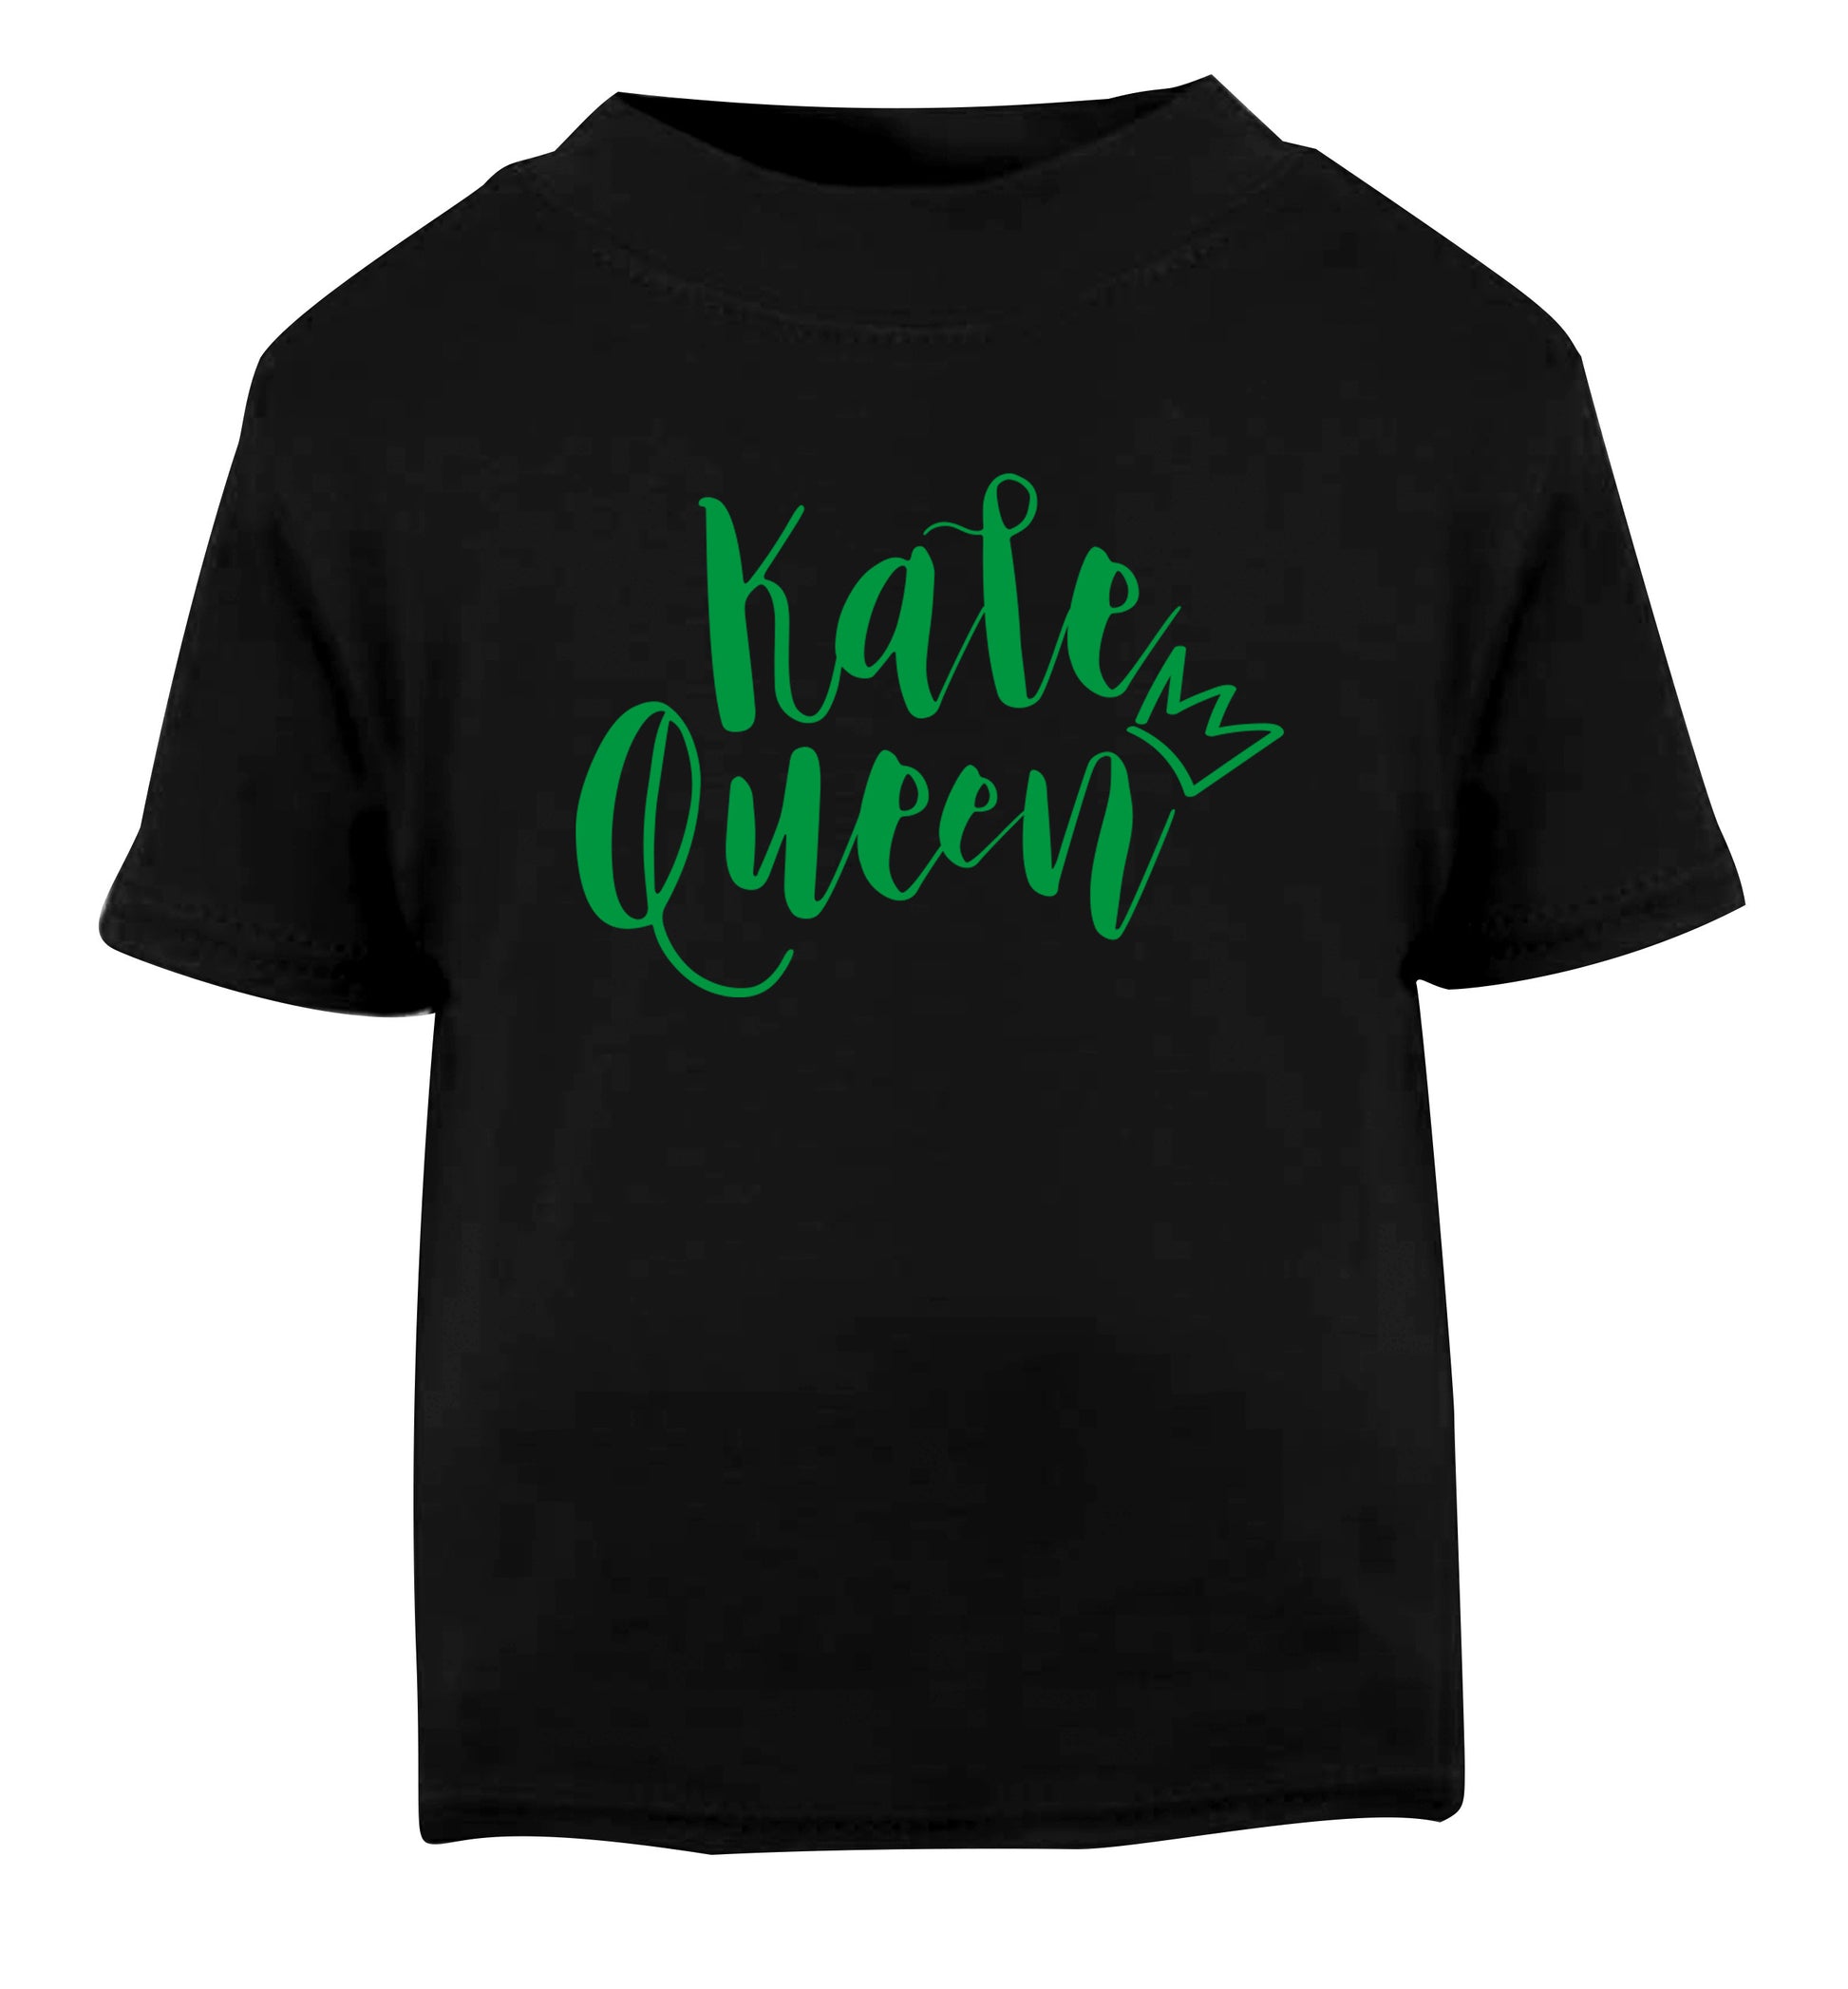 Kale Queen Black Baby Toddler Tshirt 2 years